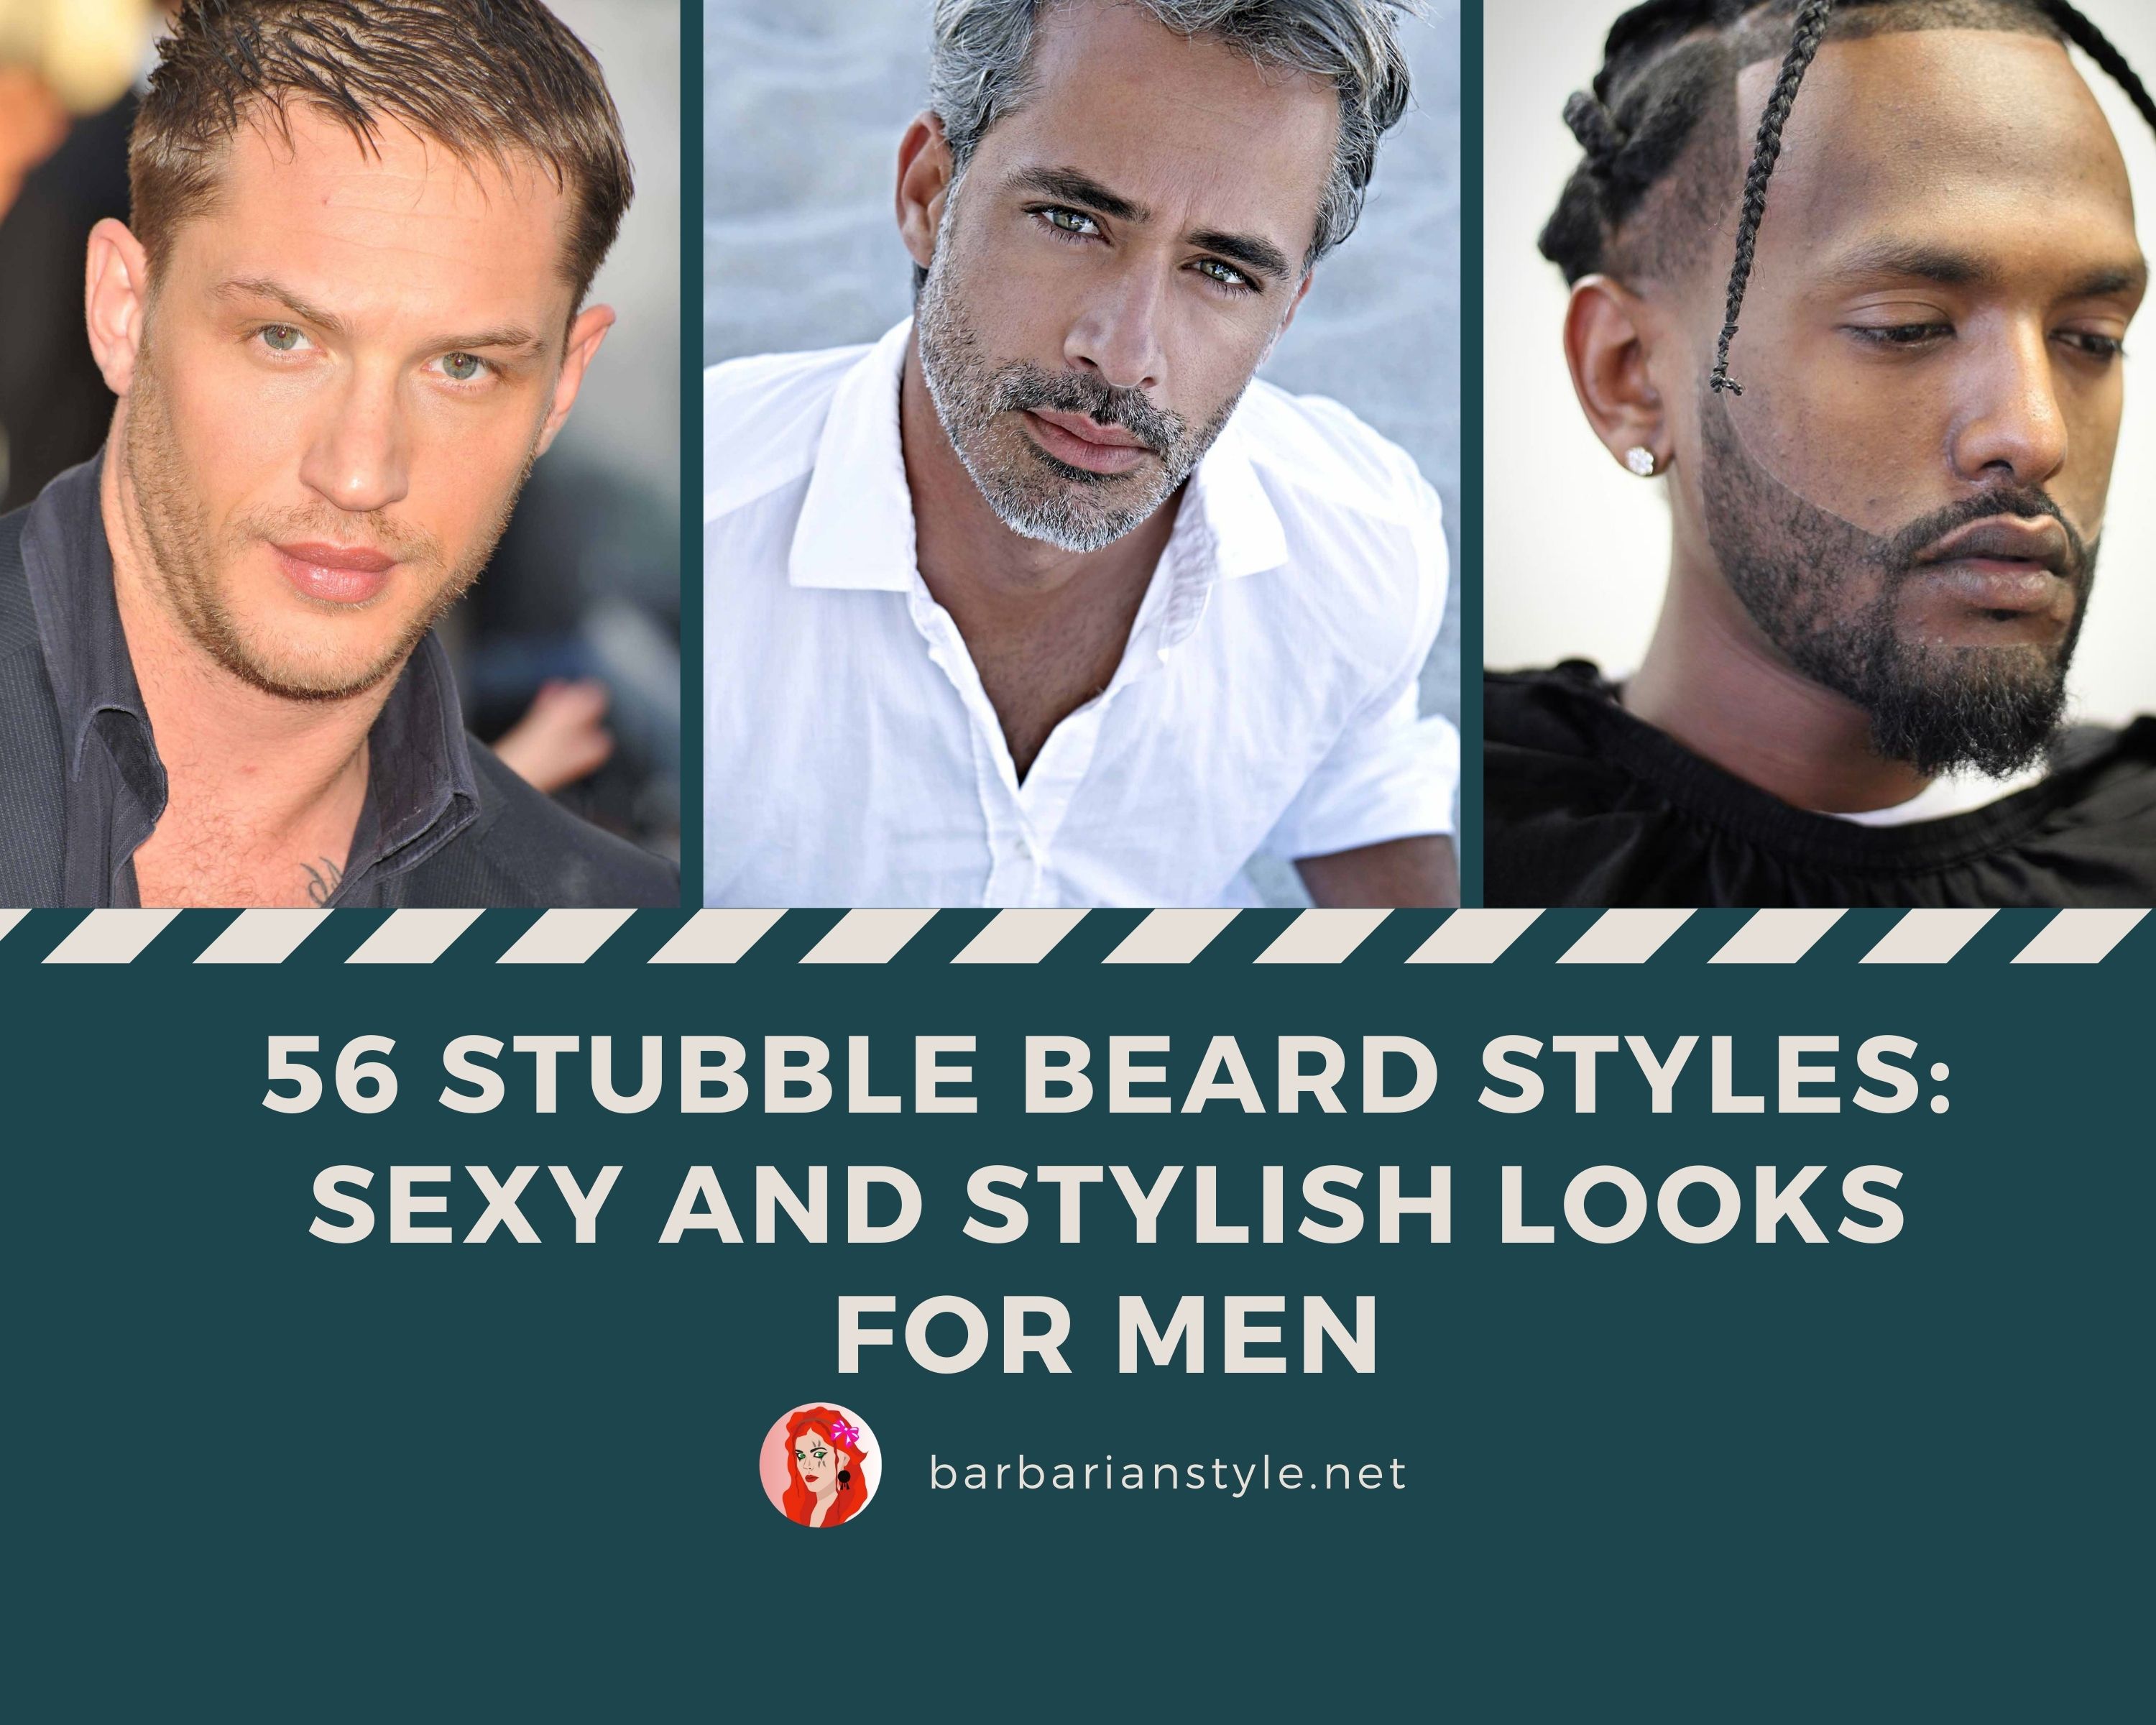 Short stubble beard styles